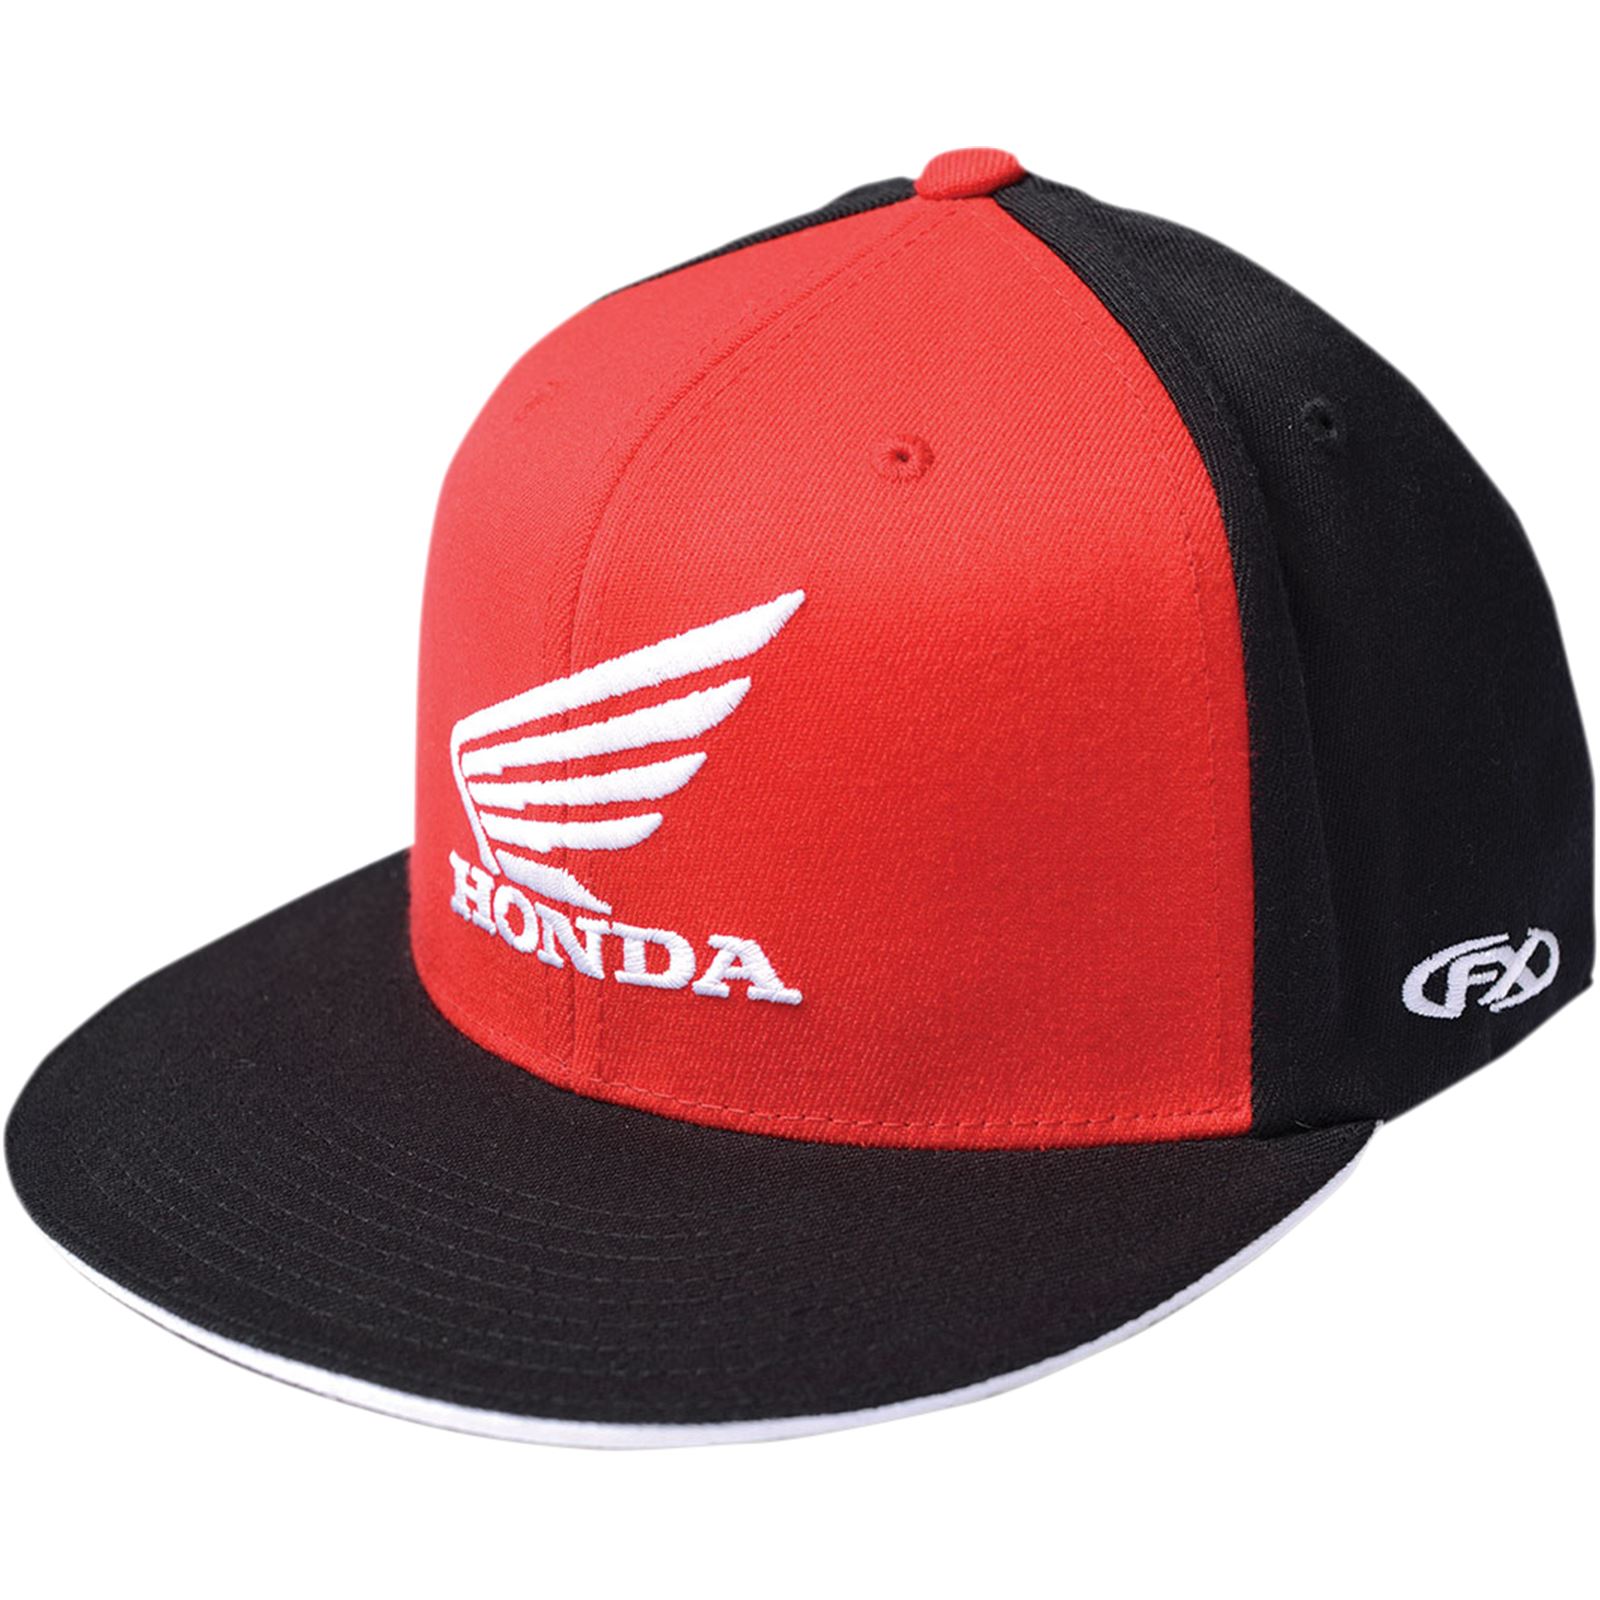 Factory Effex Honda Big Wing Hat - Small/Medium - Black/Red